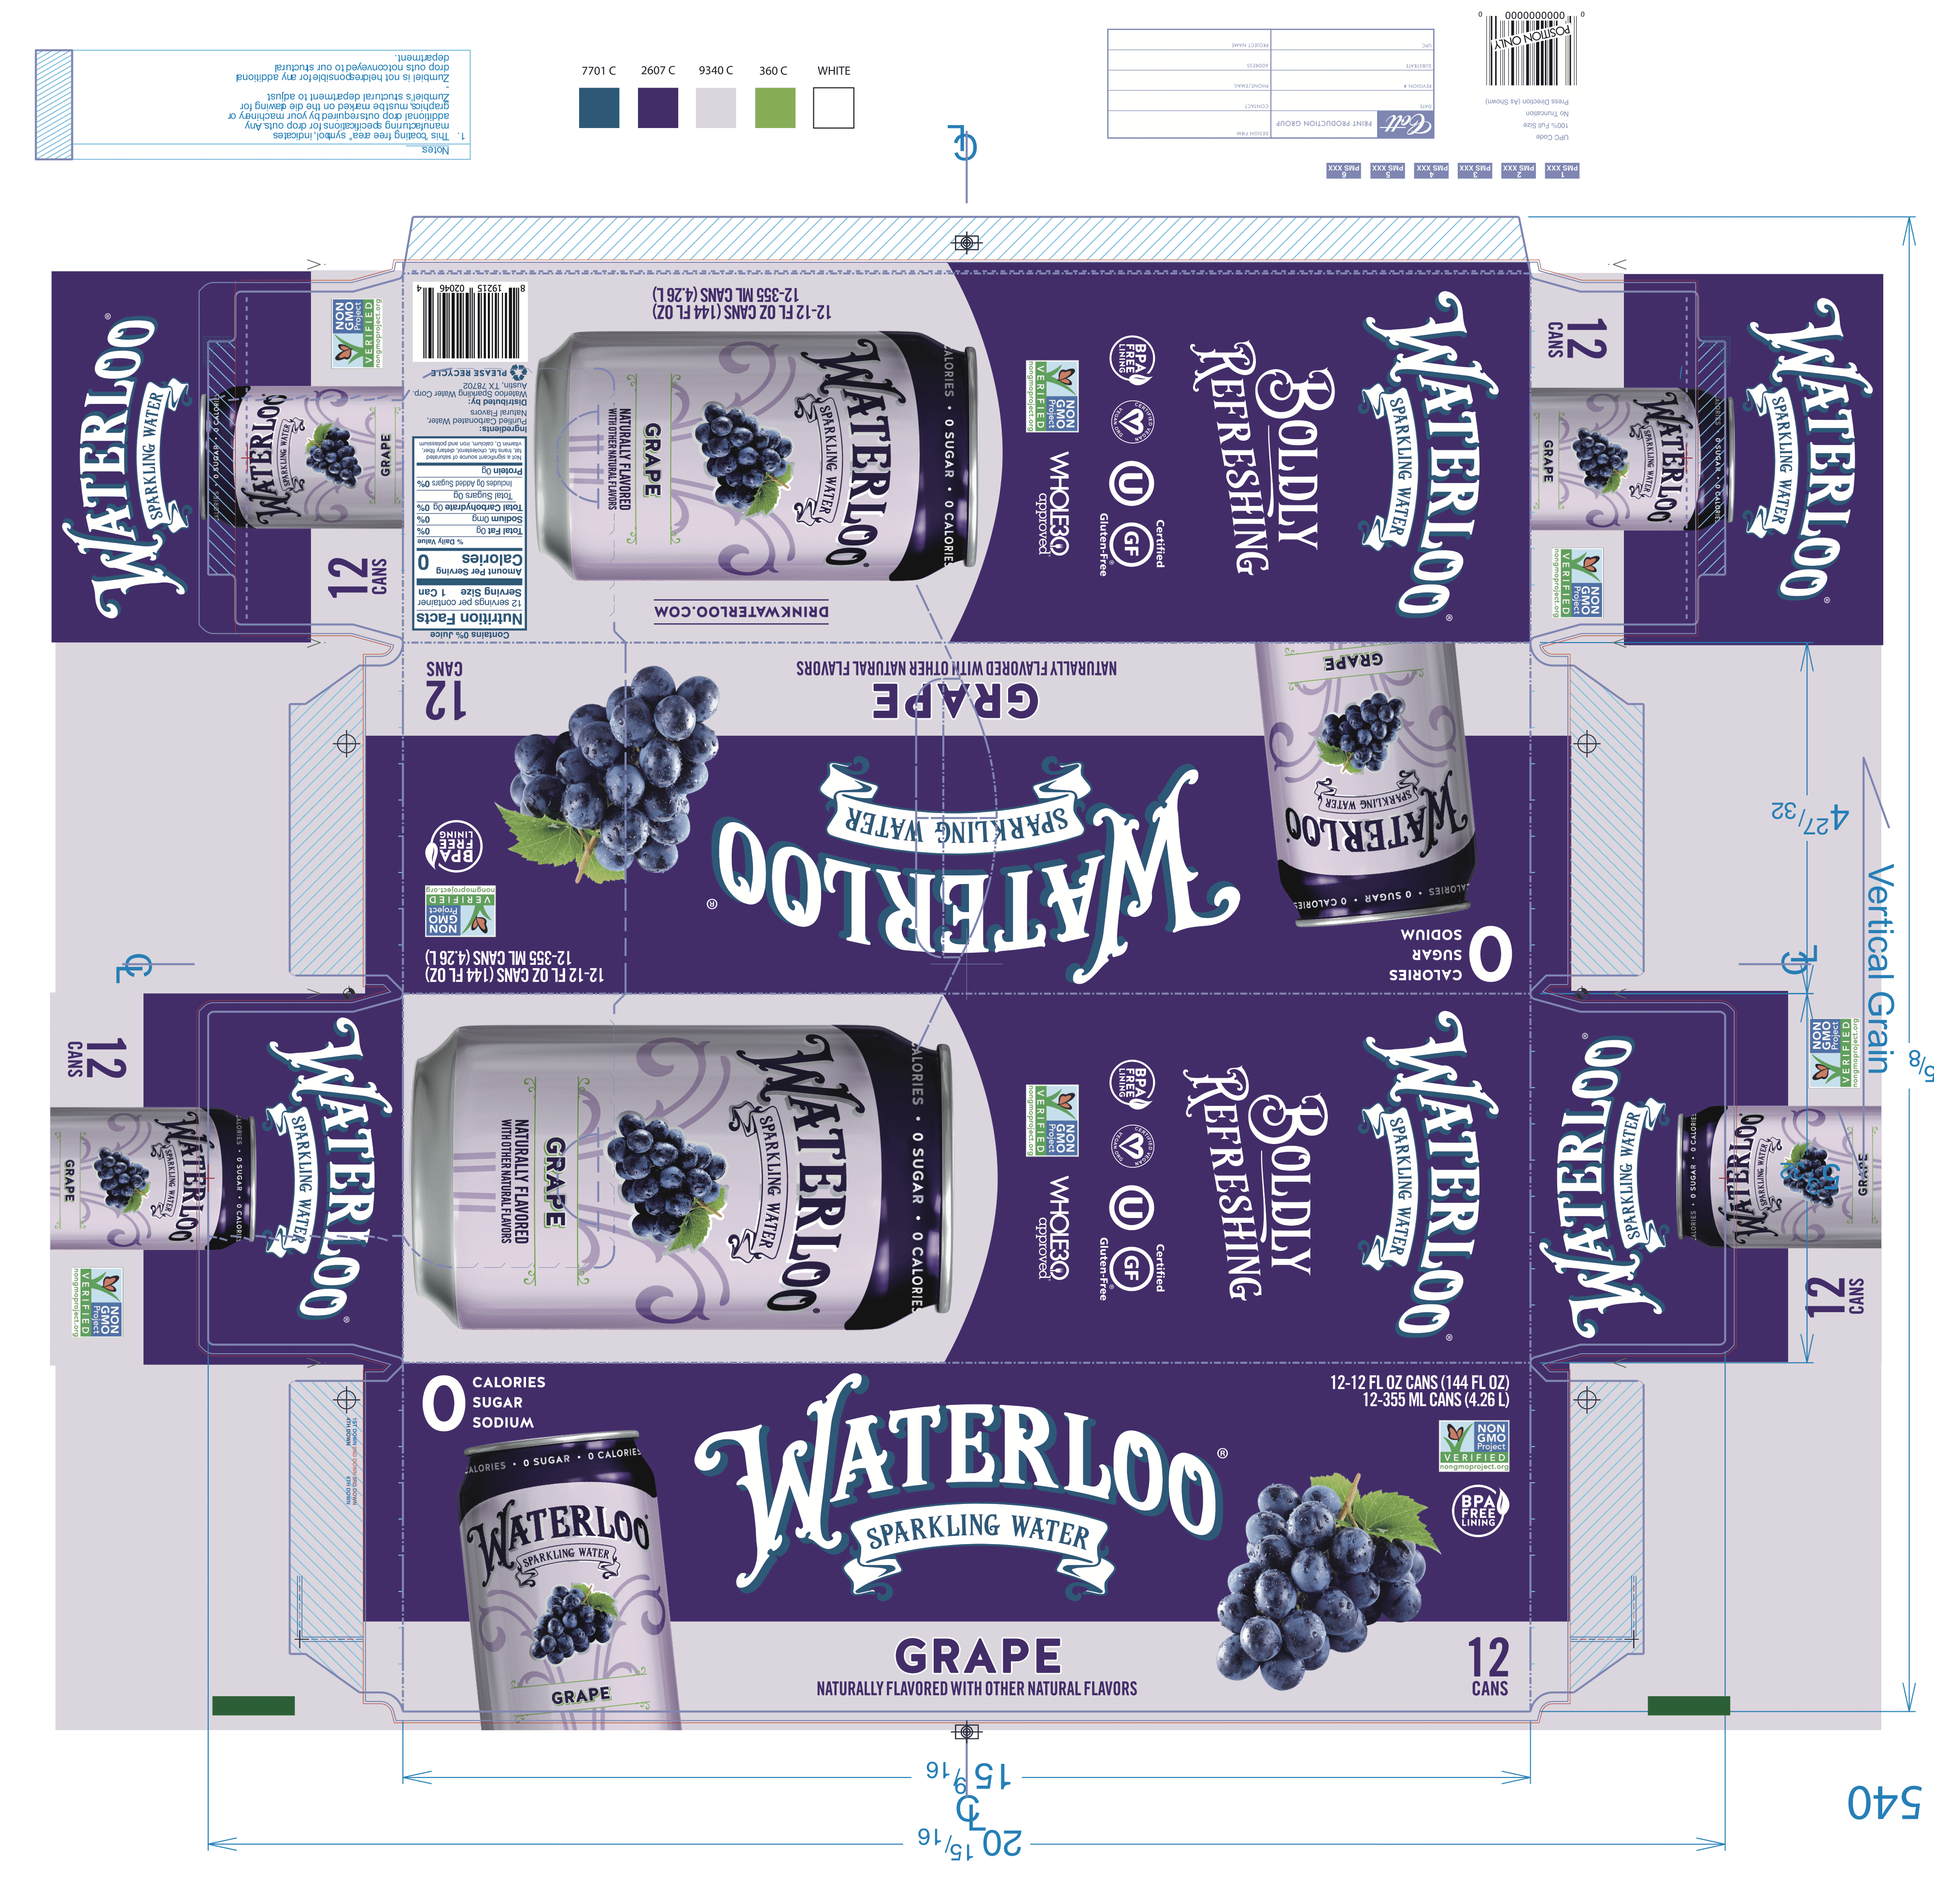 Waterloo Grape Sparkling Water 2 innerpacks per case 144.0 fl Product Label